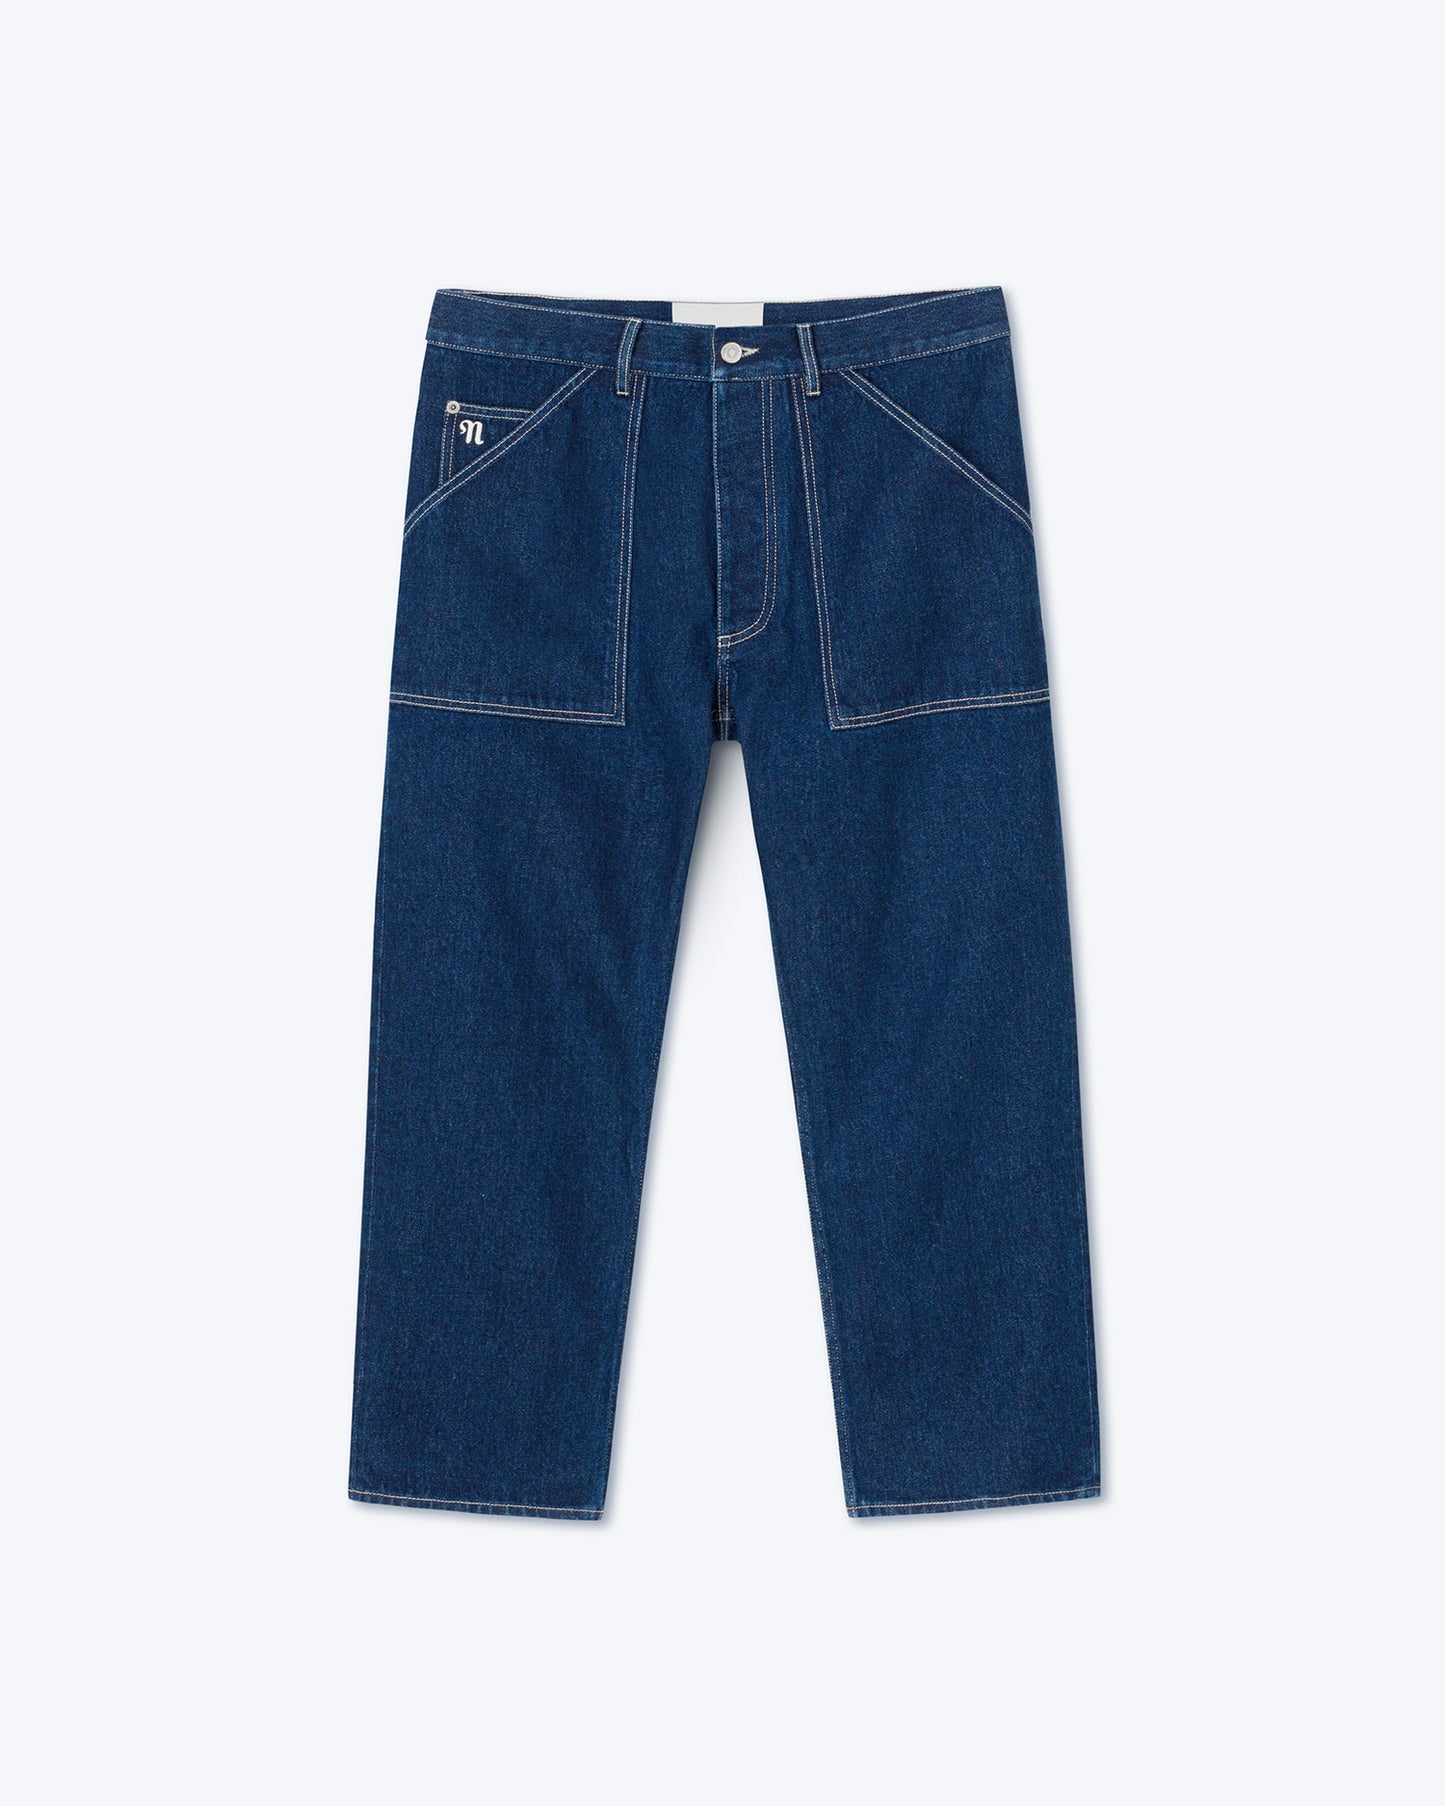 Jasper - Workwear Jeans - Eco Indigo